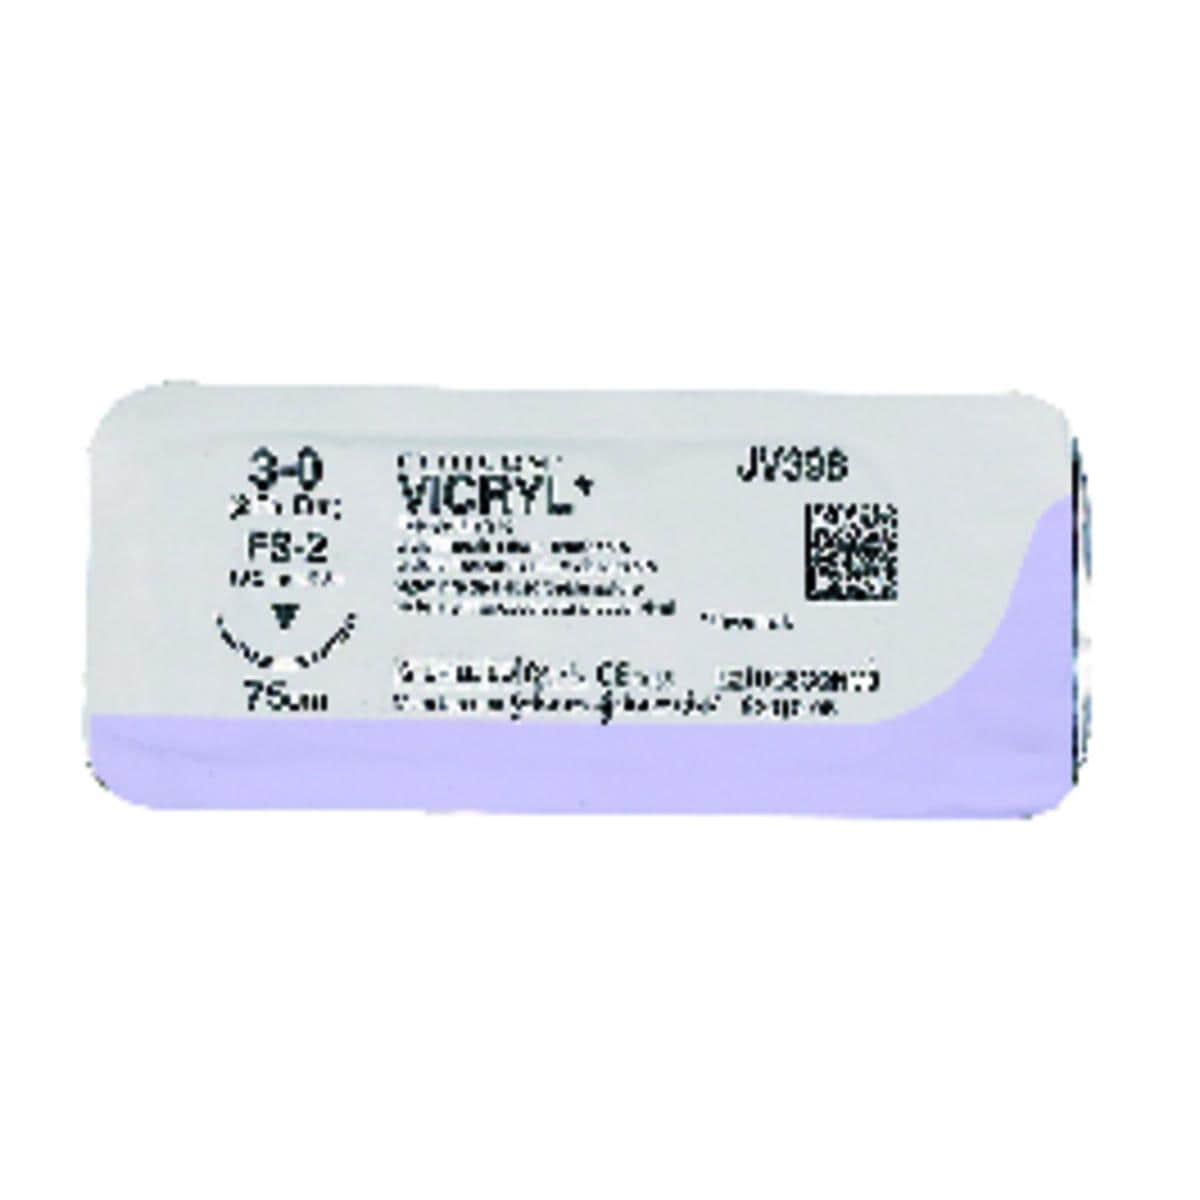 Fil Vicryl violet ETHICON - JV390 - Bote de 36